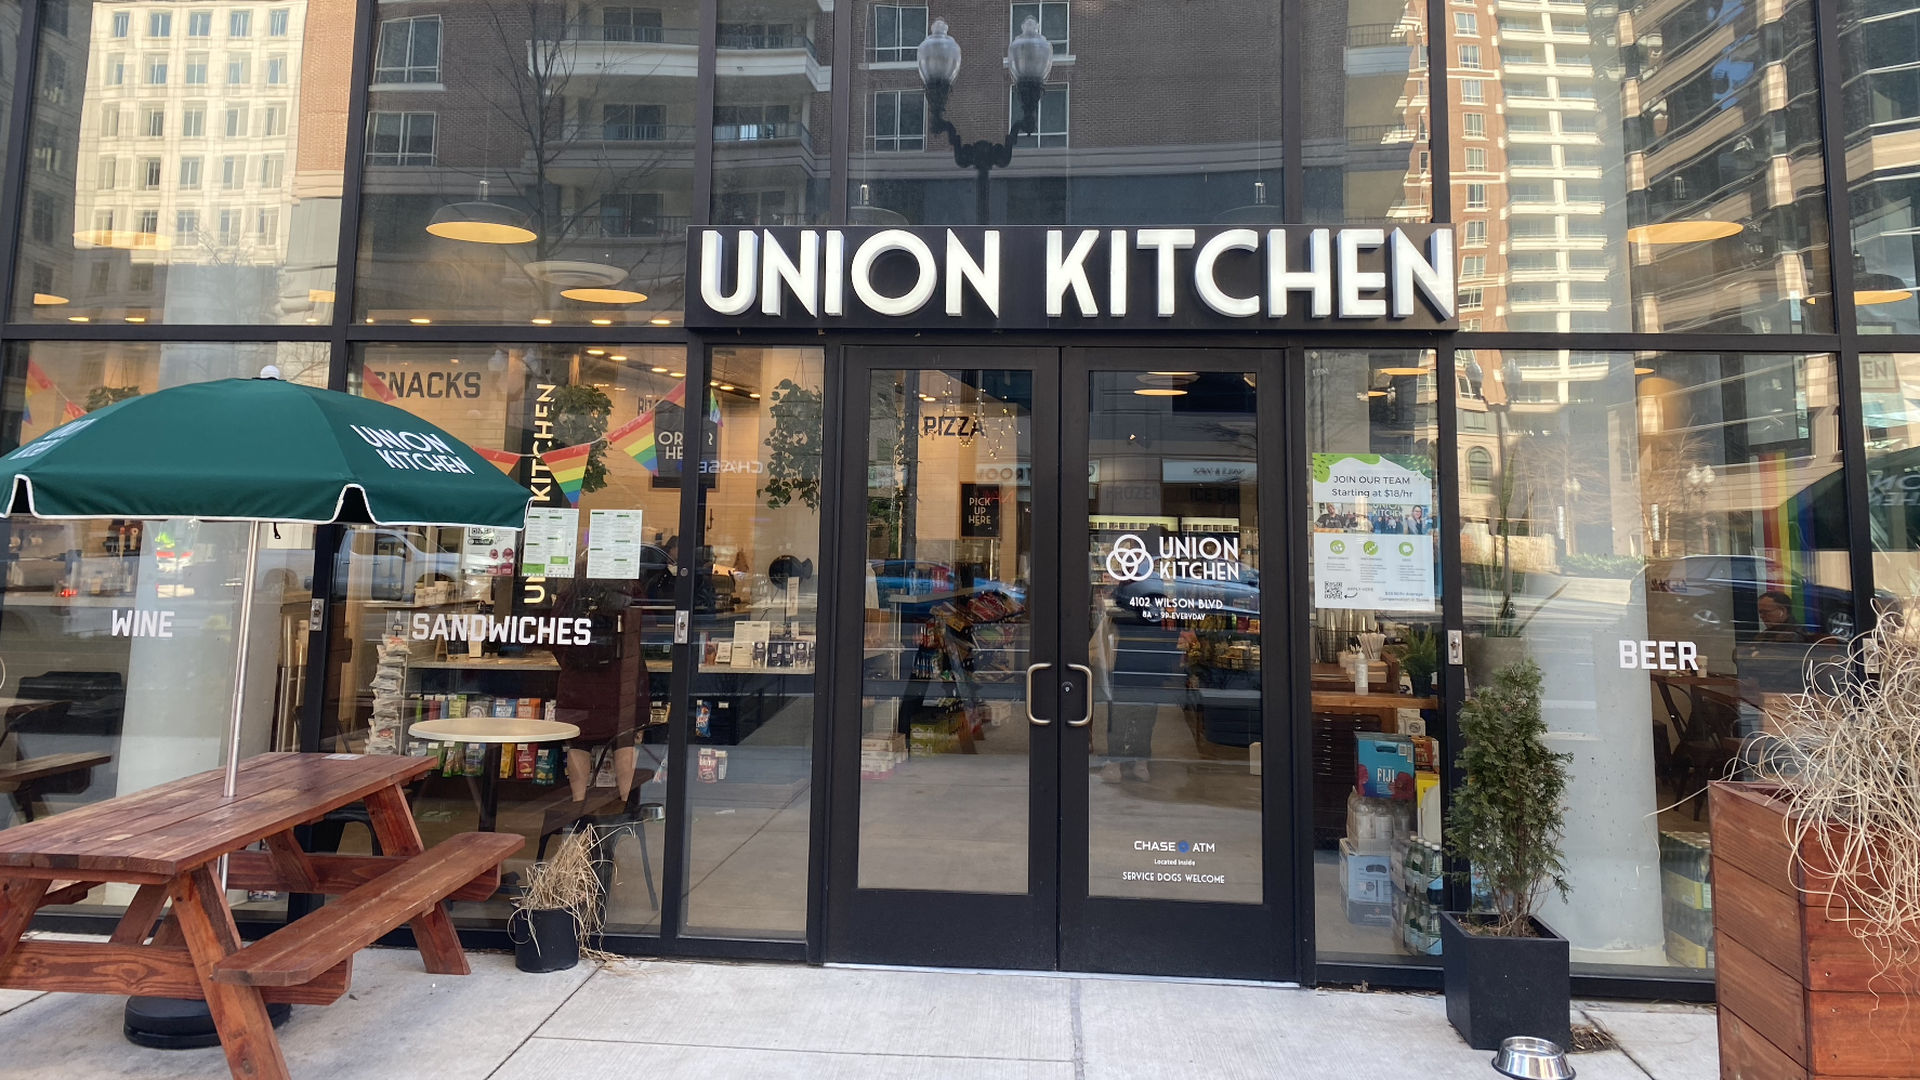 The exterior of Union Kitchen's Ballston location.